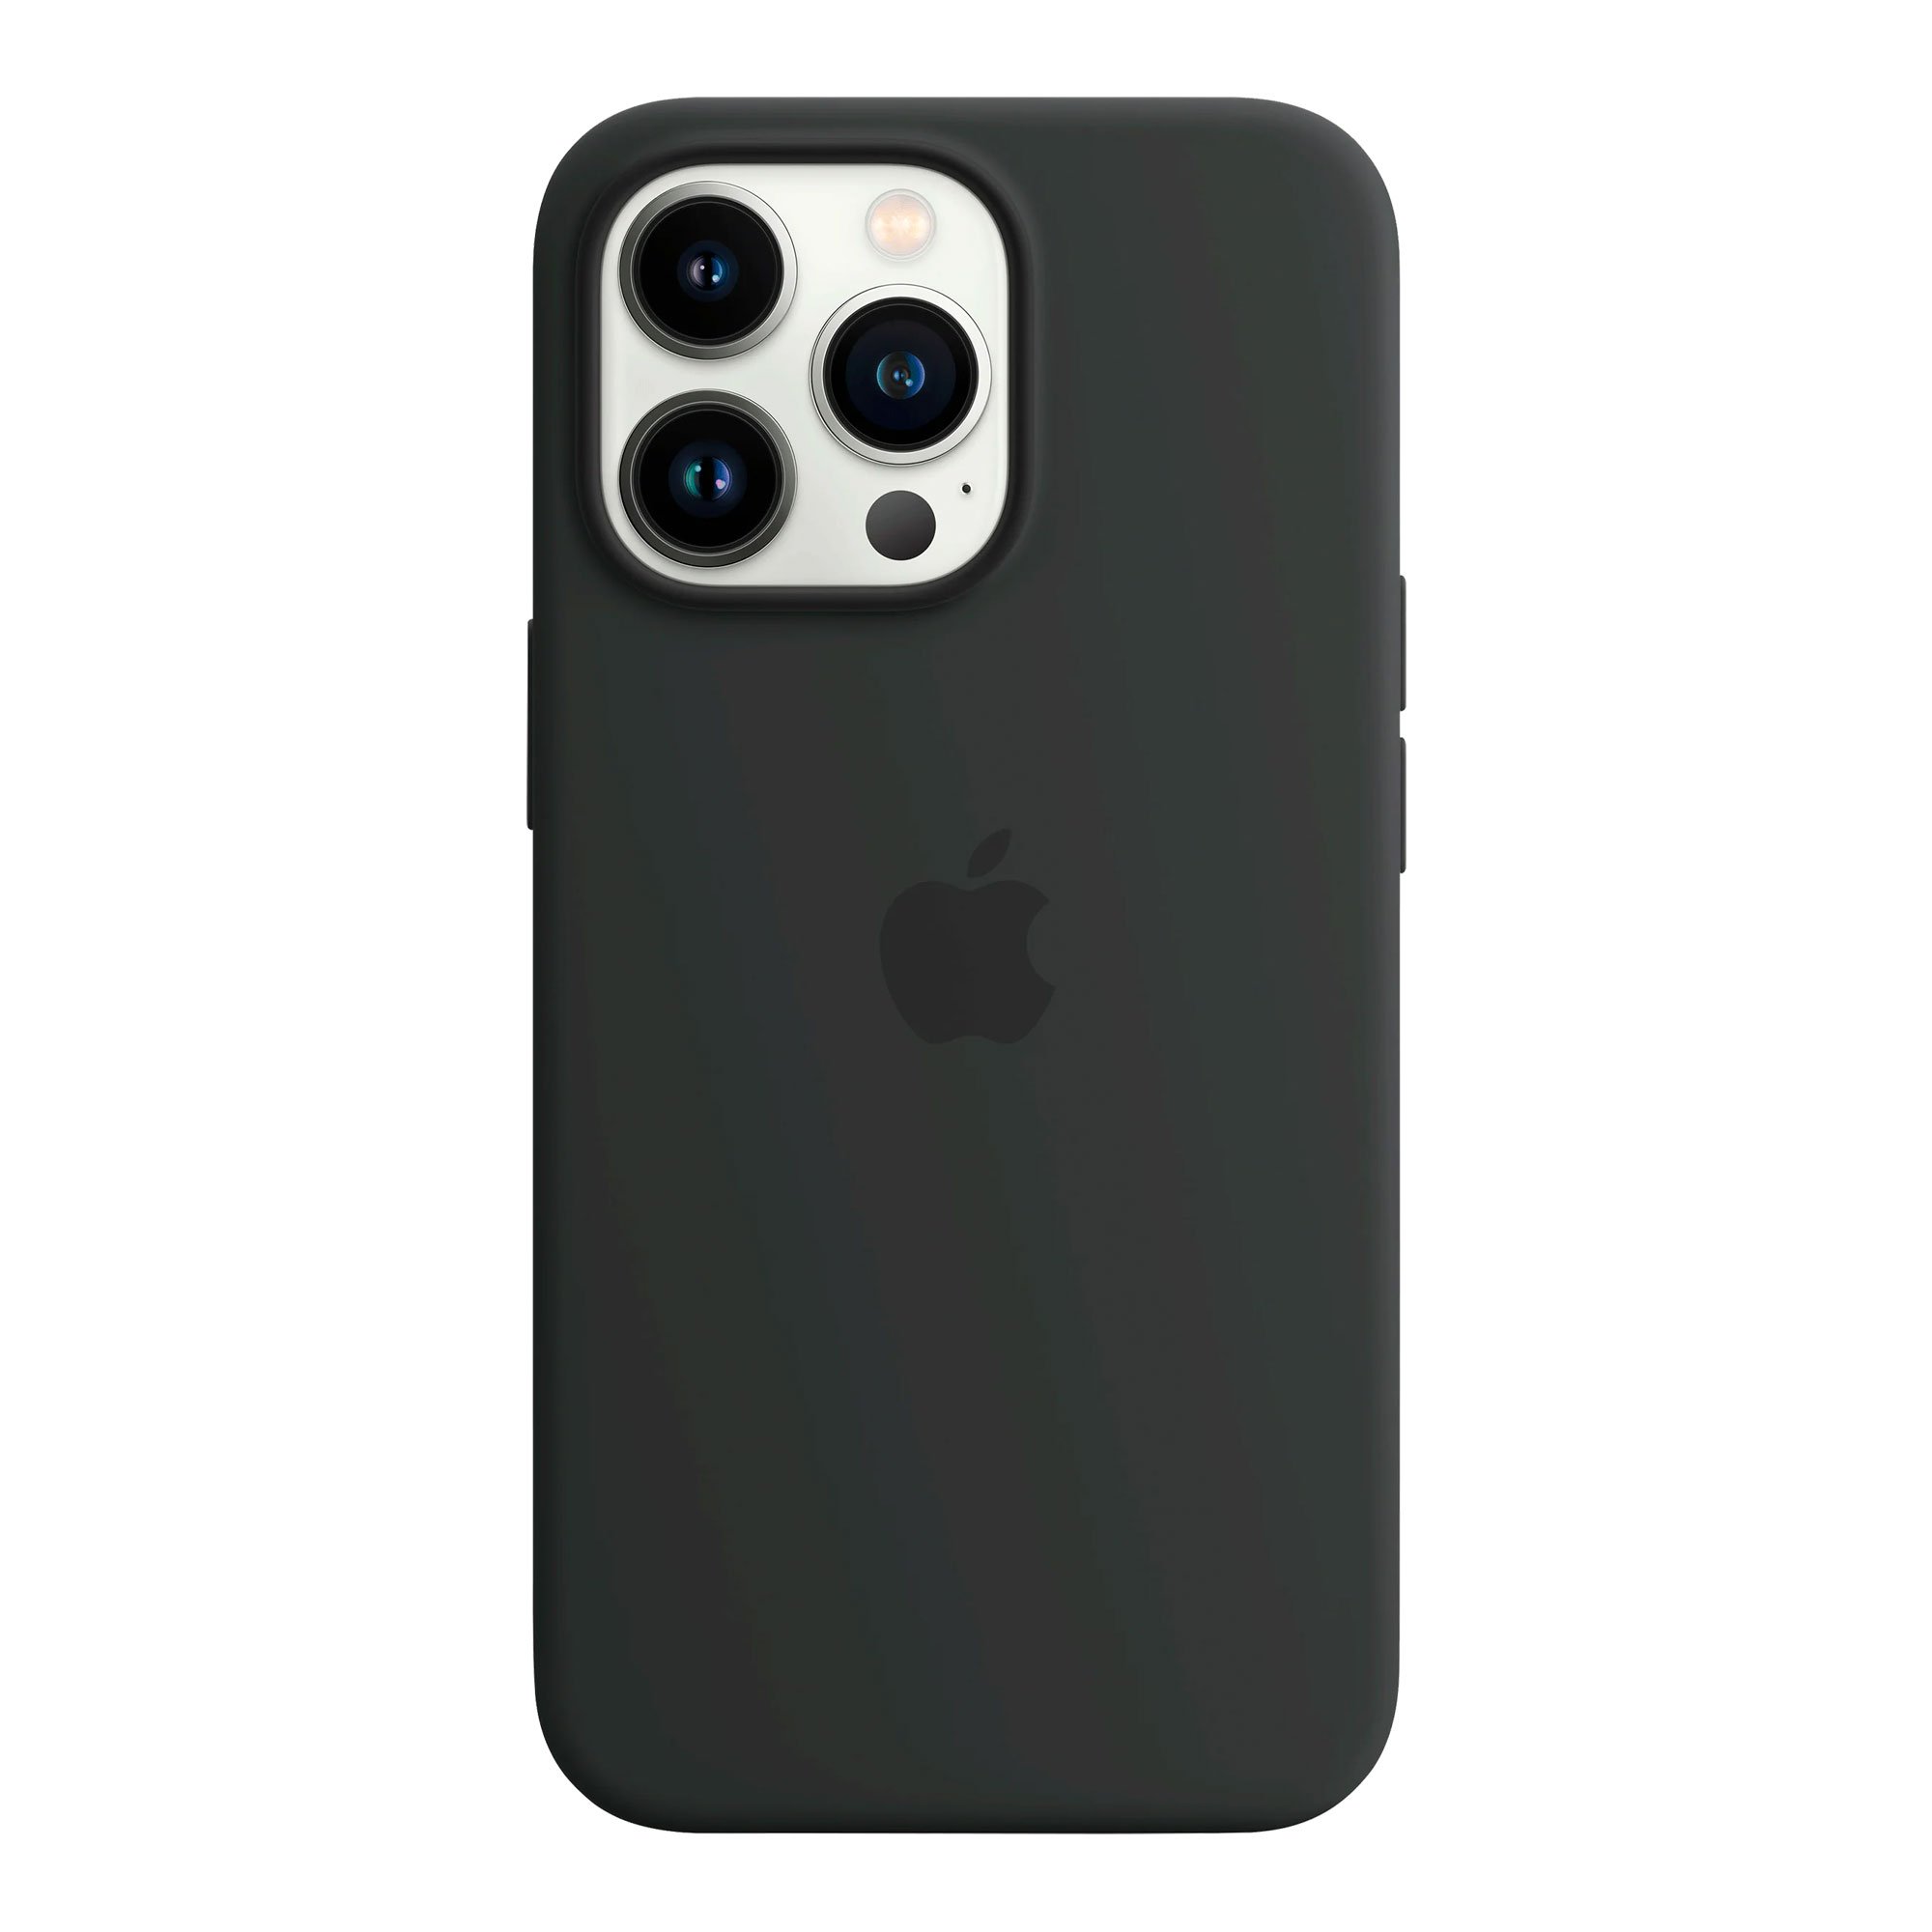 Protector de Pantalla Mobo Premium iPhone 12 Pro Max Negro - Mobo